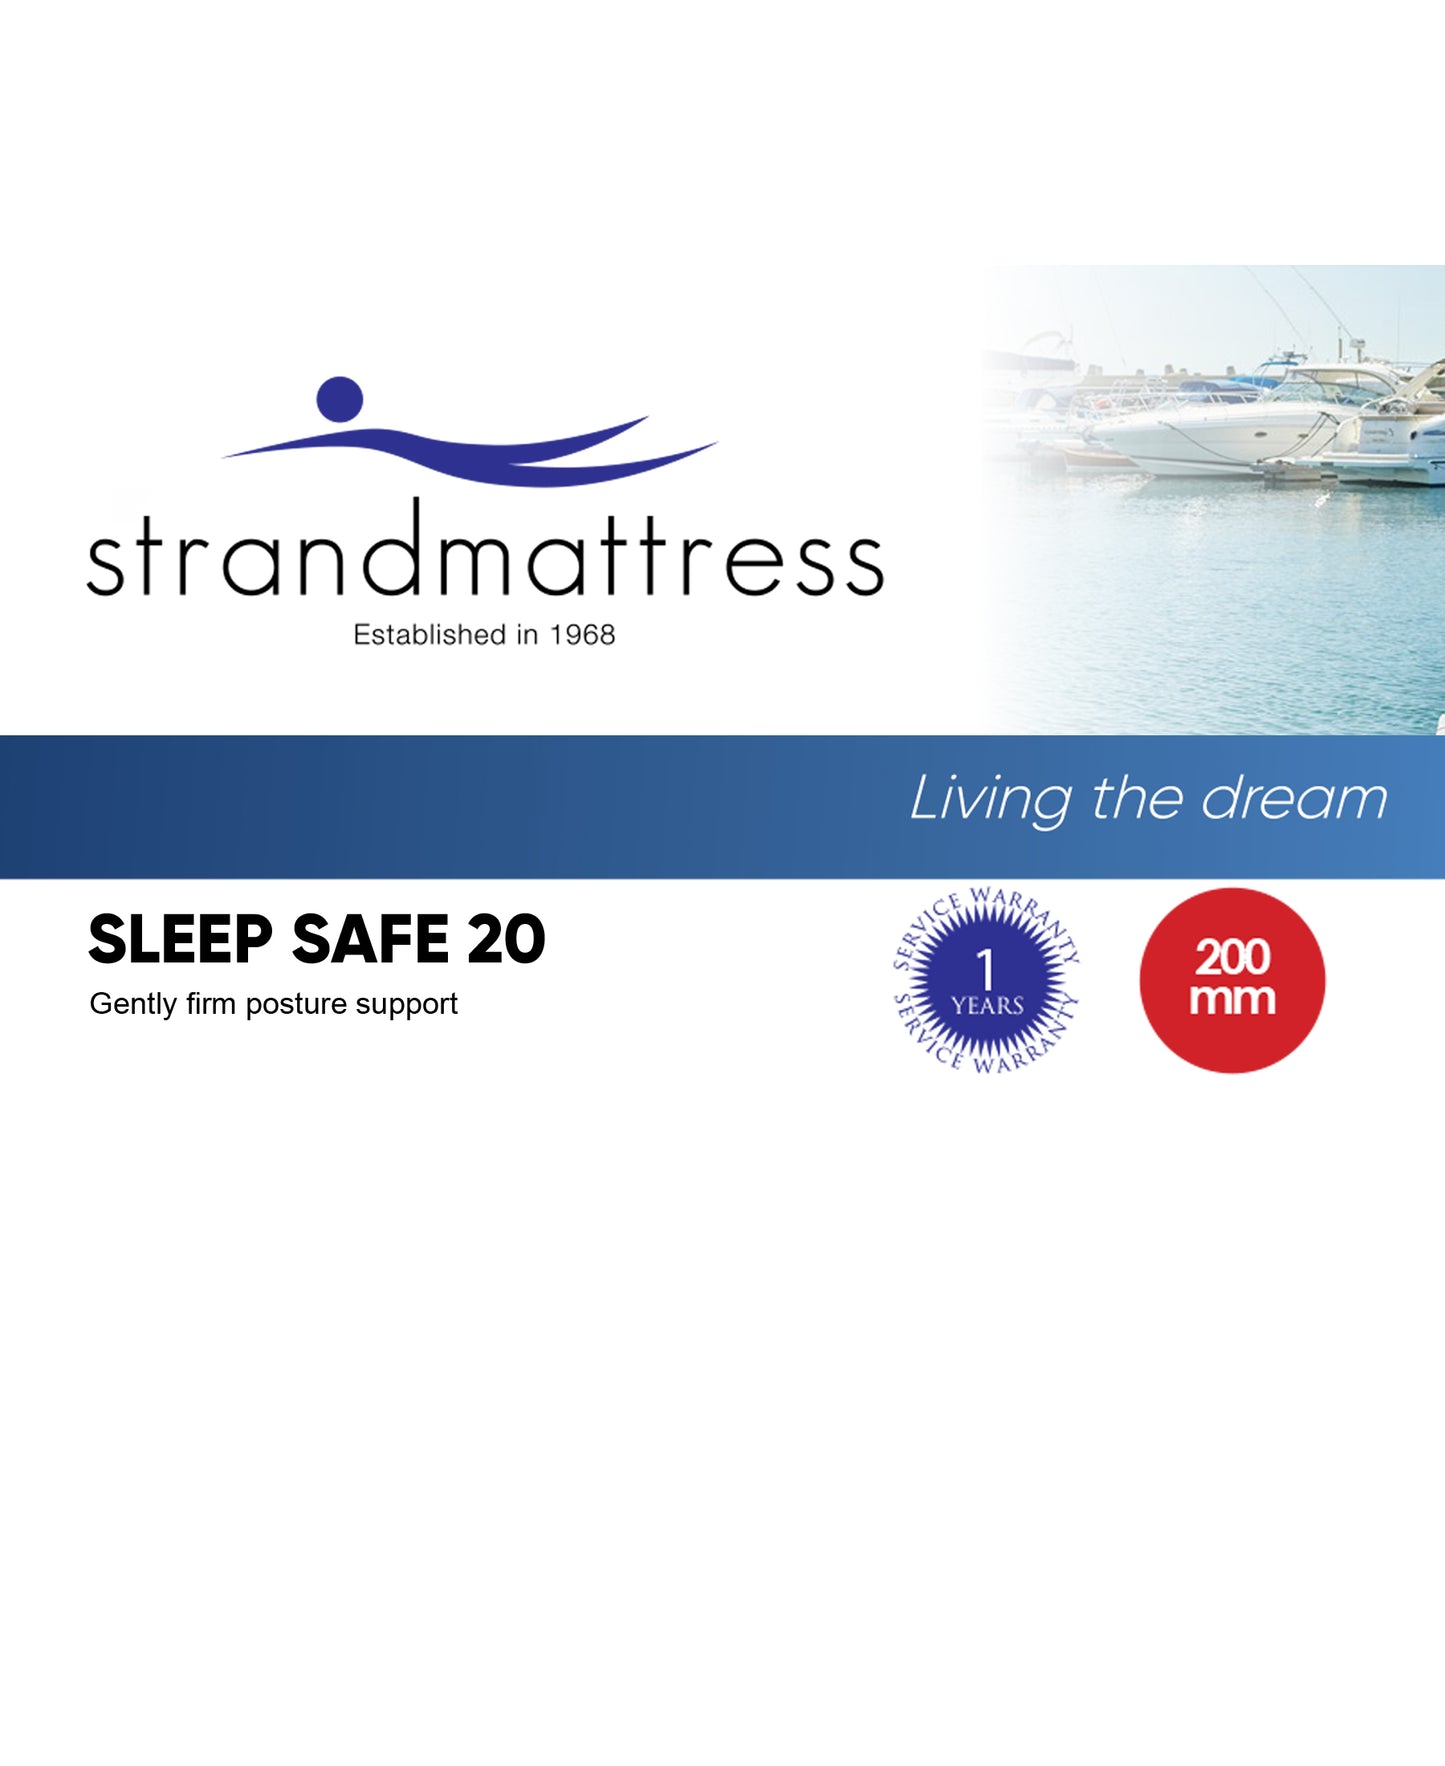 Sleep Safe 2.0 Strandmattress Mattress